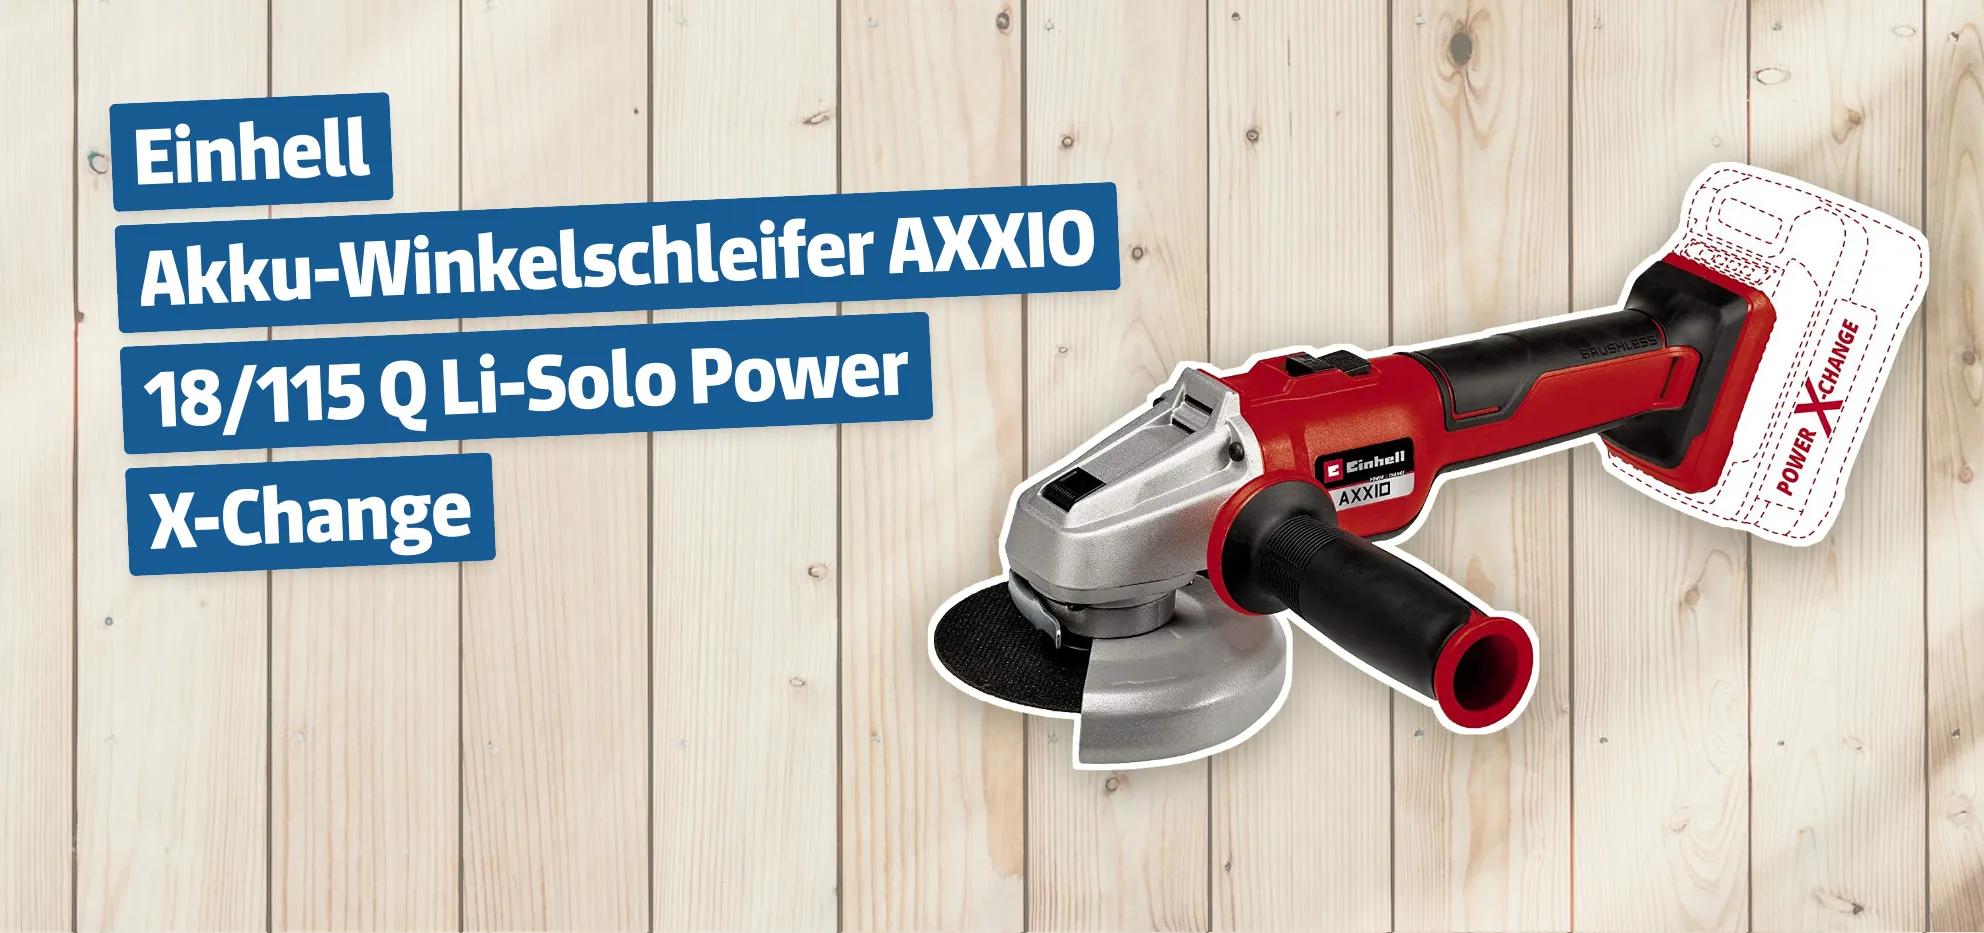 Einhell Akku-Winkelschleifer AXXIO 18/115 Q Li-Solo Power X-Change